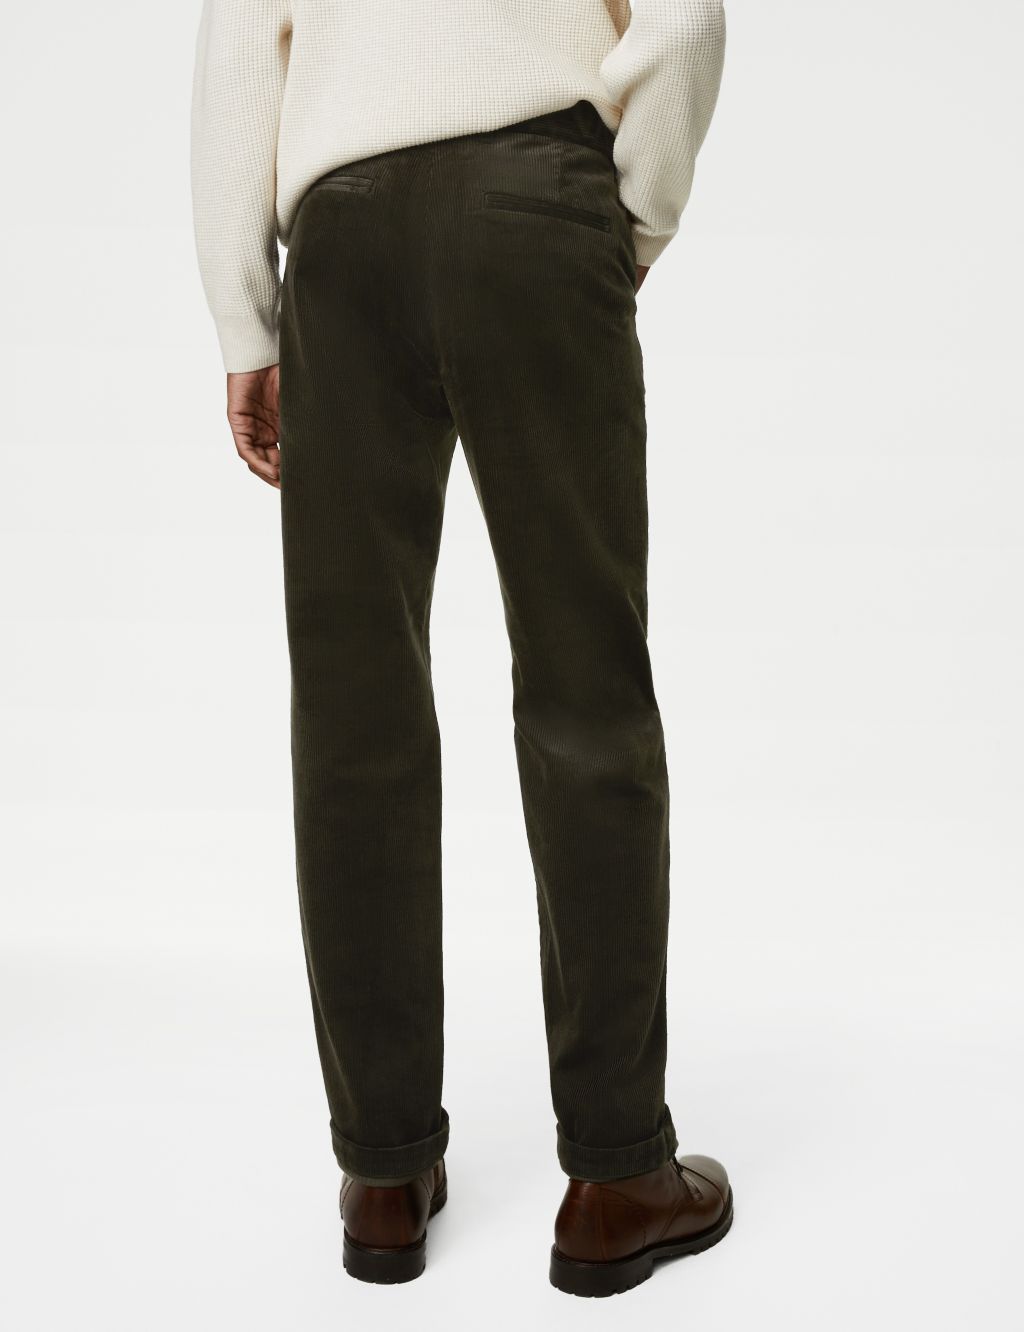 Regular Fit Luxury Corduroy Trouser image 5